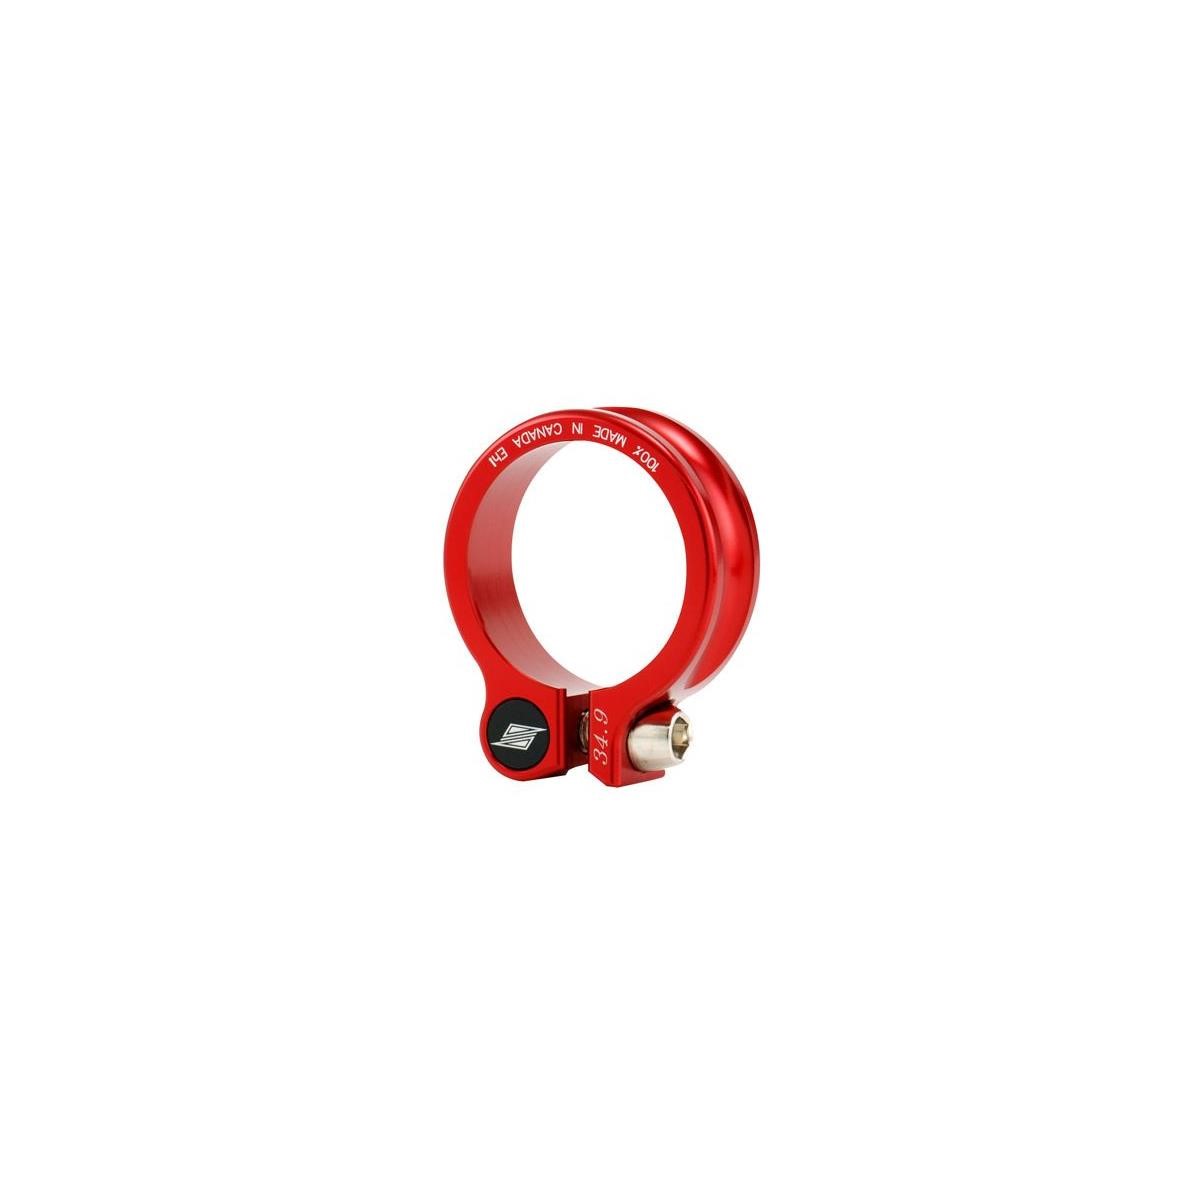 Straitline Components Collier de Selle Seatpost Collar Red, 34.9 mm